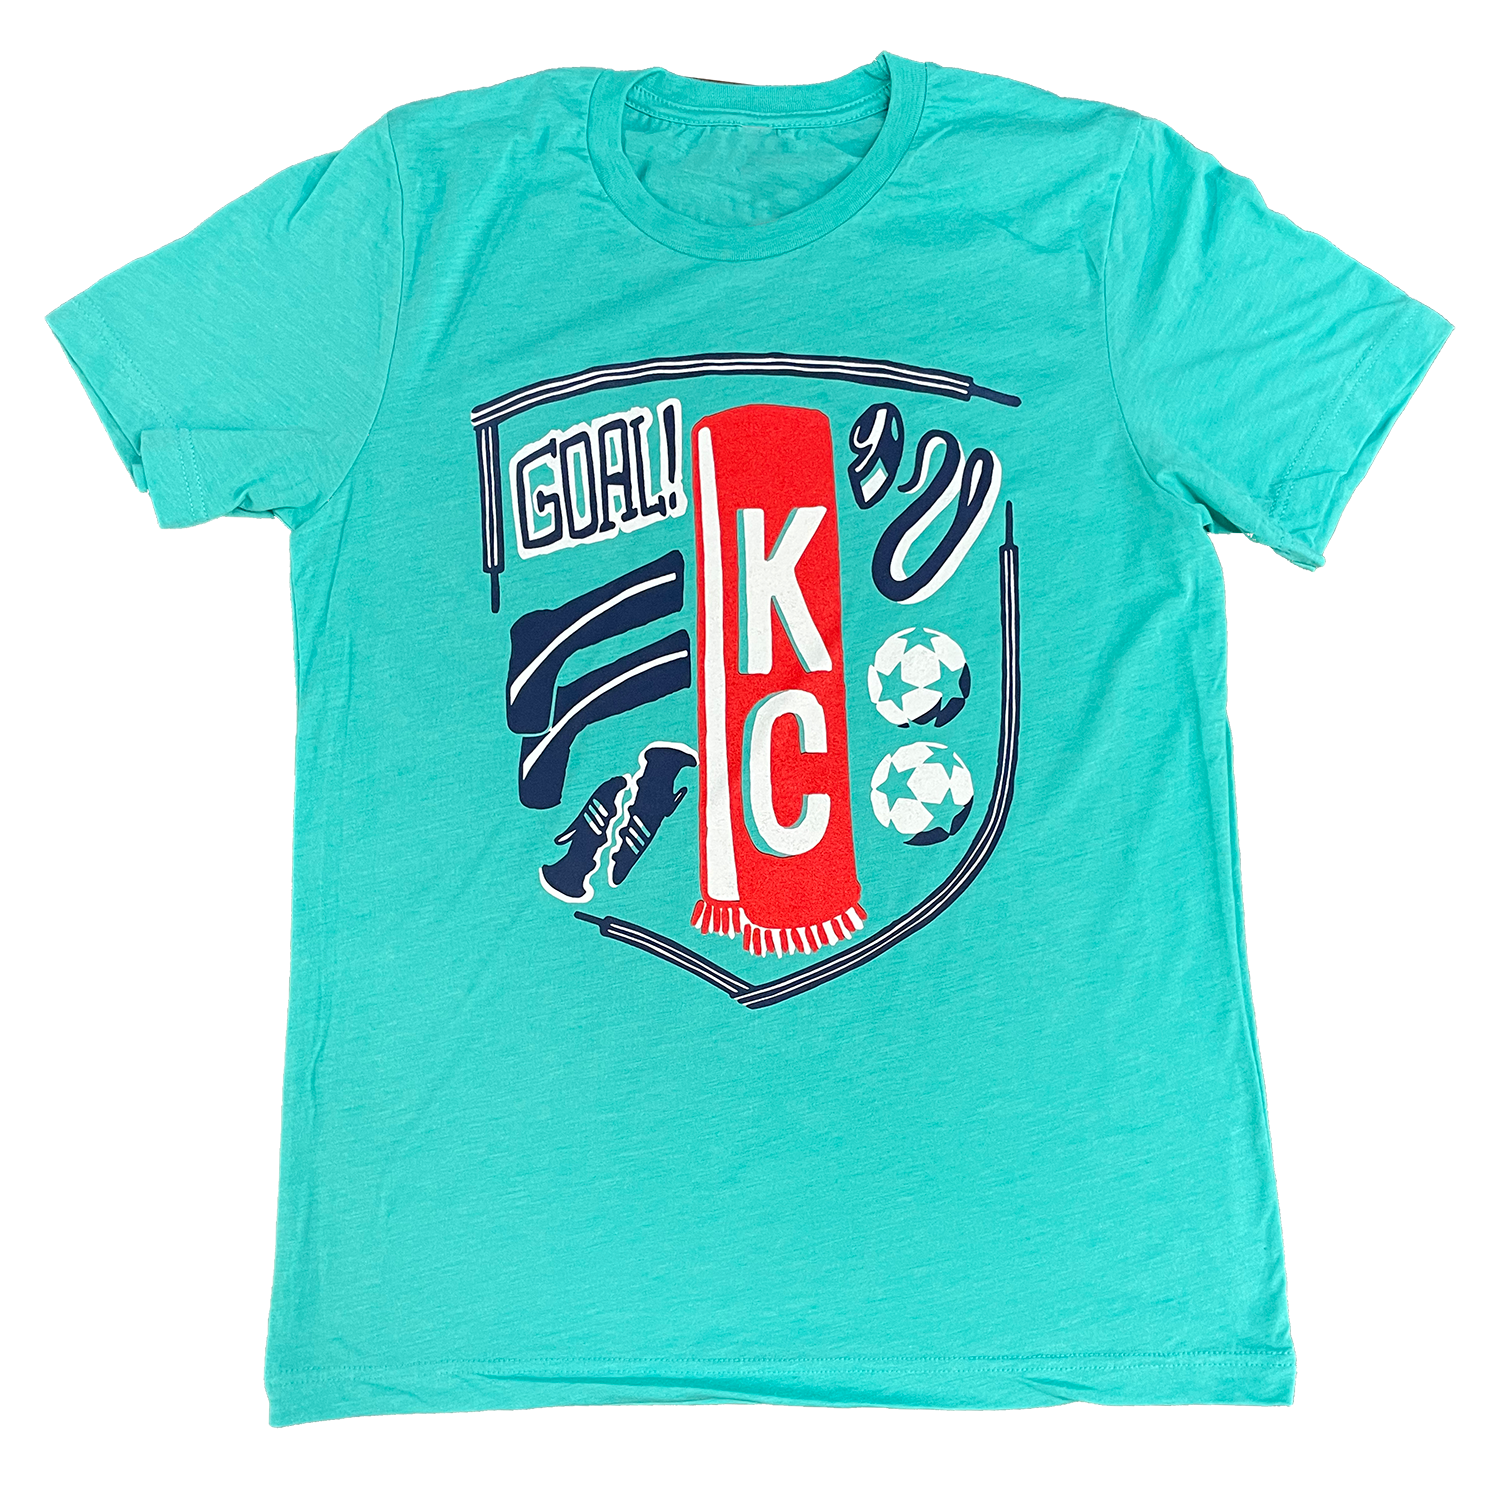 HyperKC - Kansas City apparel by local artists